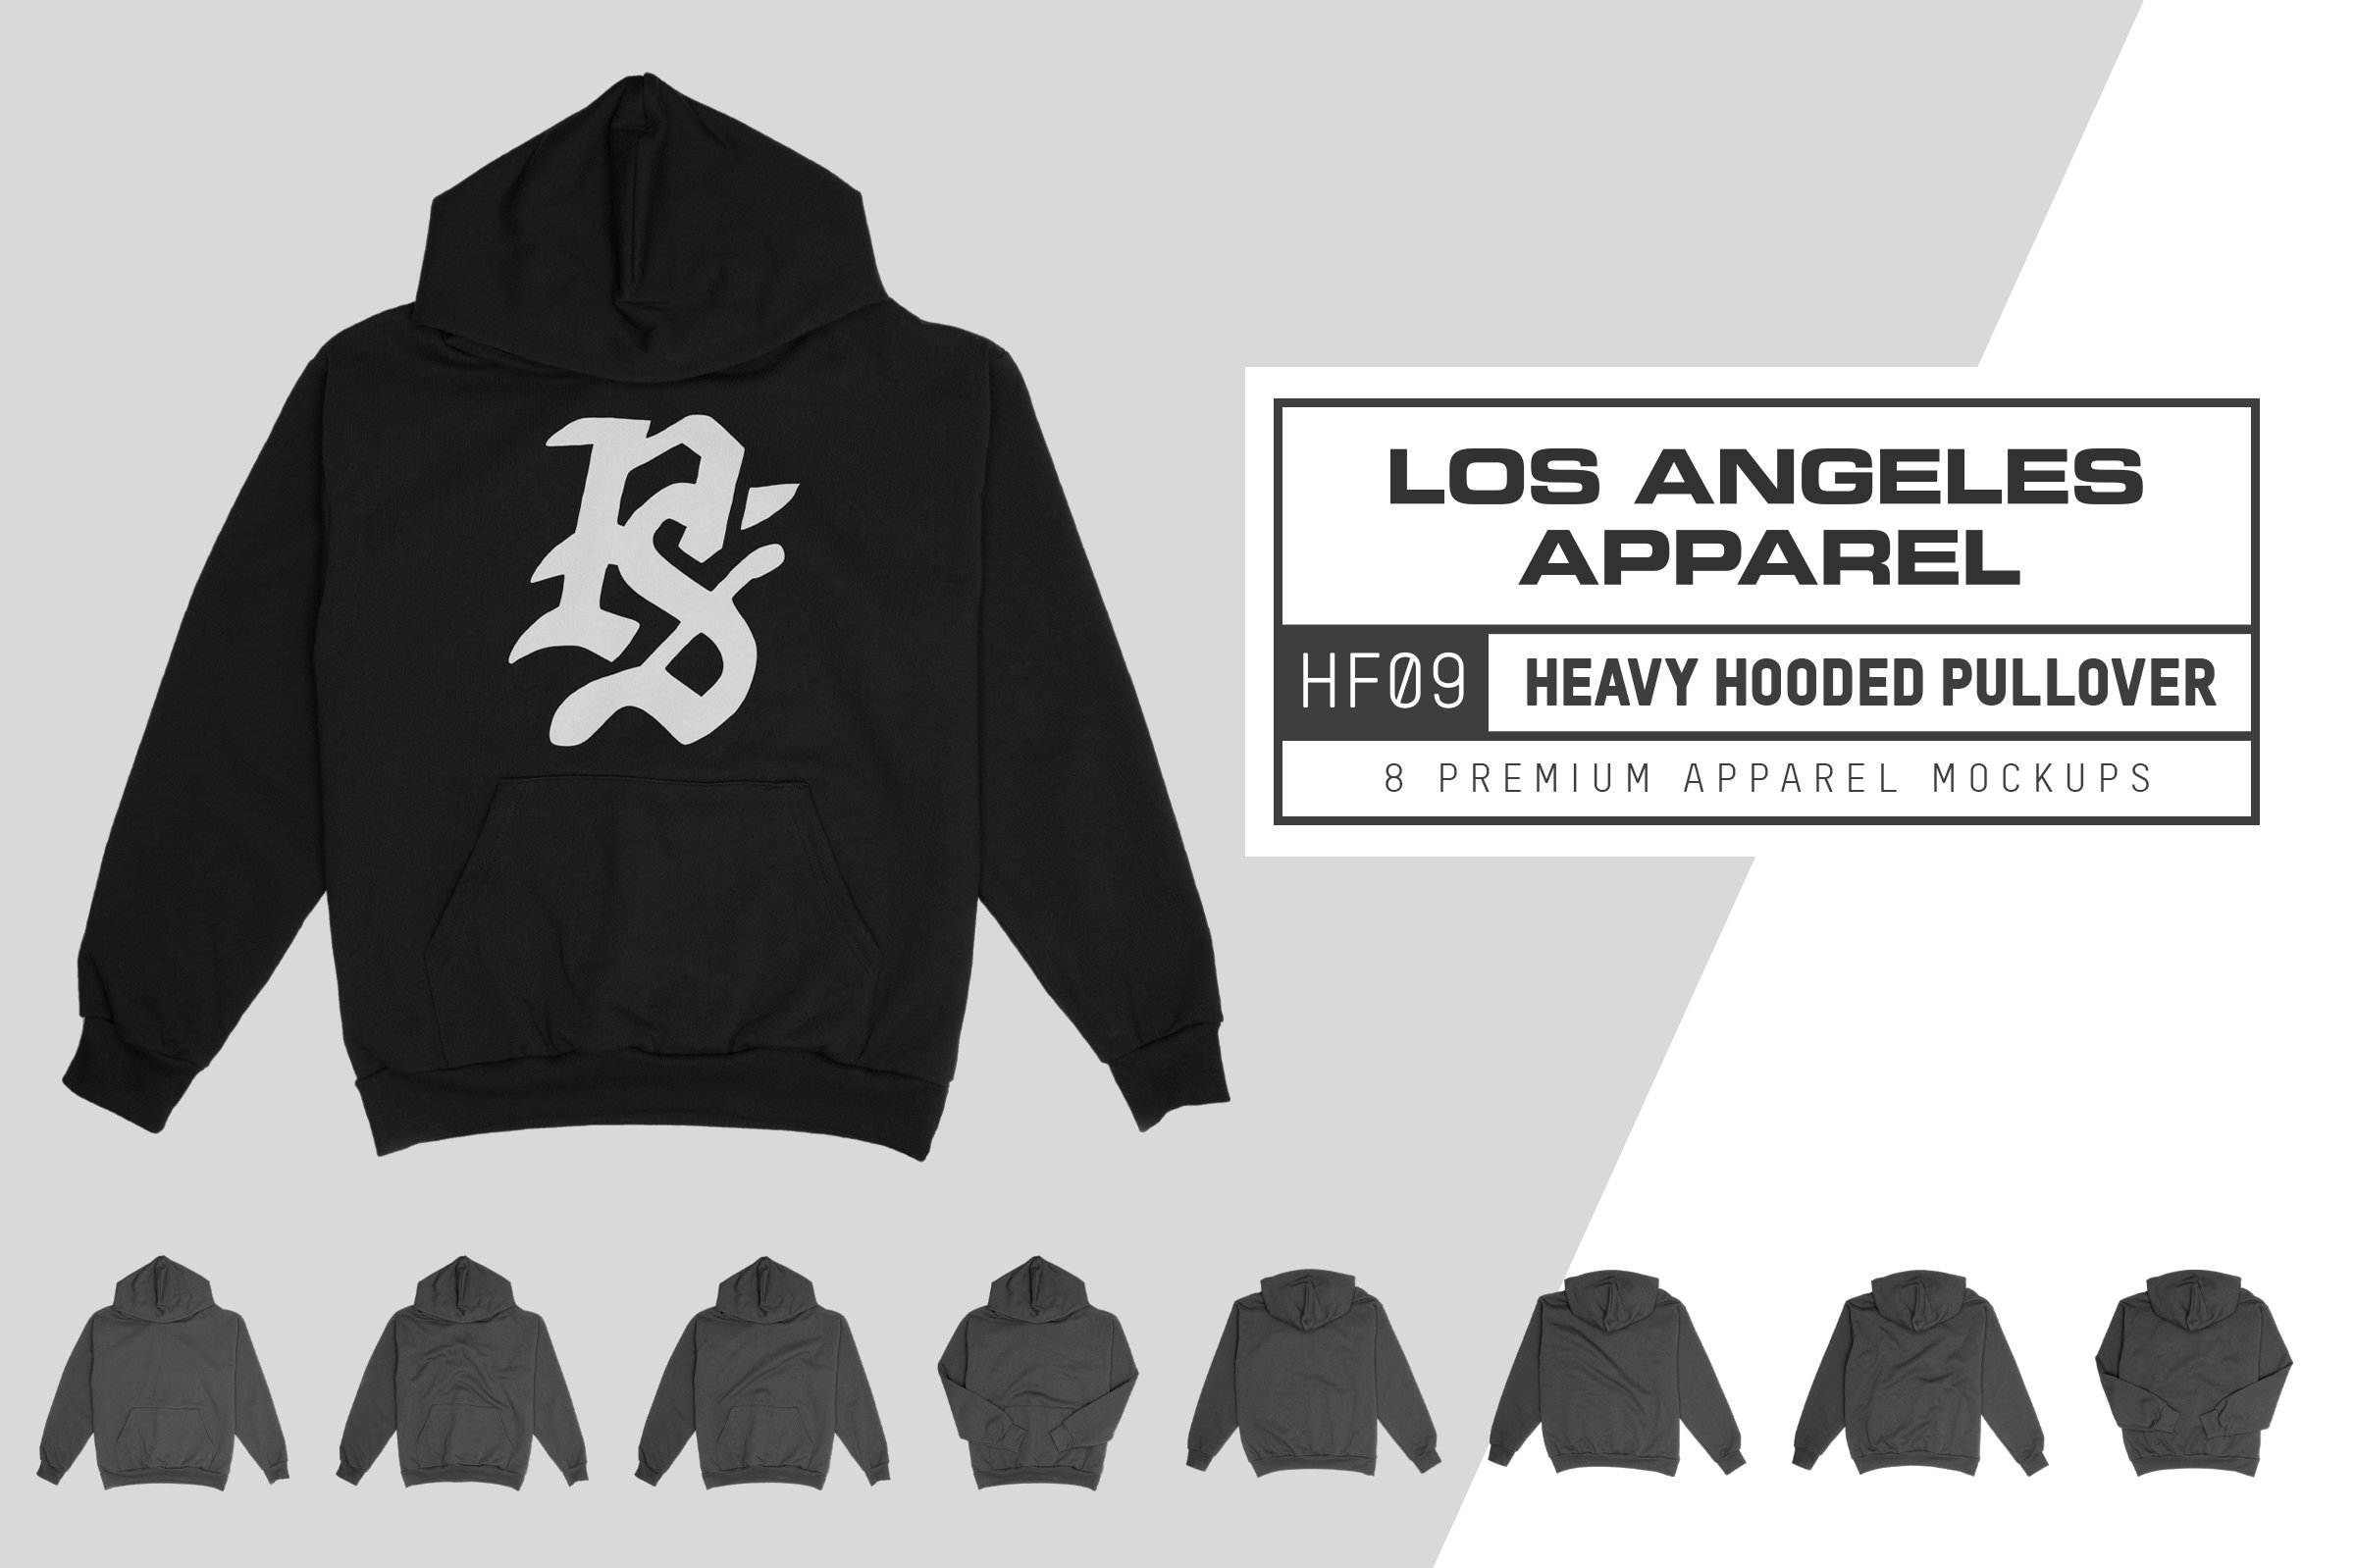 LA Apparel HF09 Hooded Sweatshirt cover image.